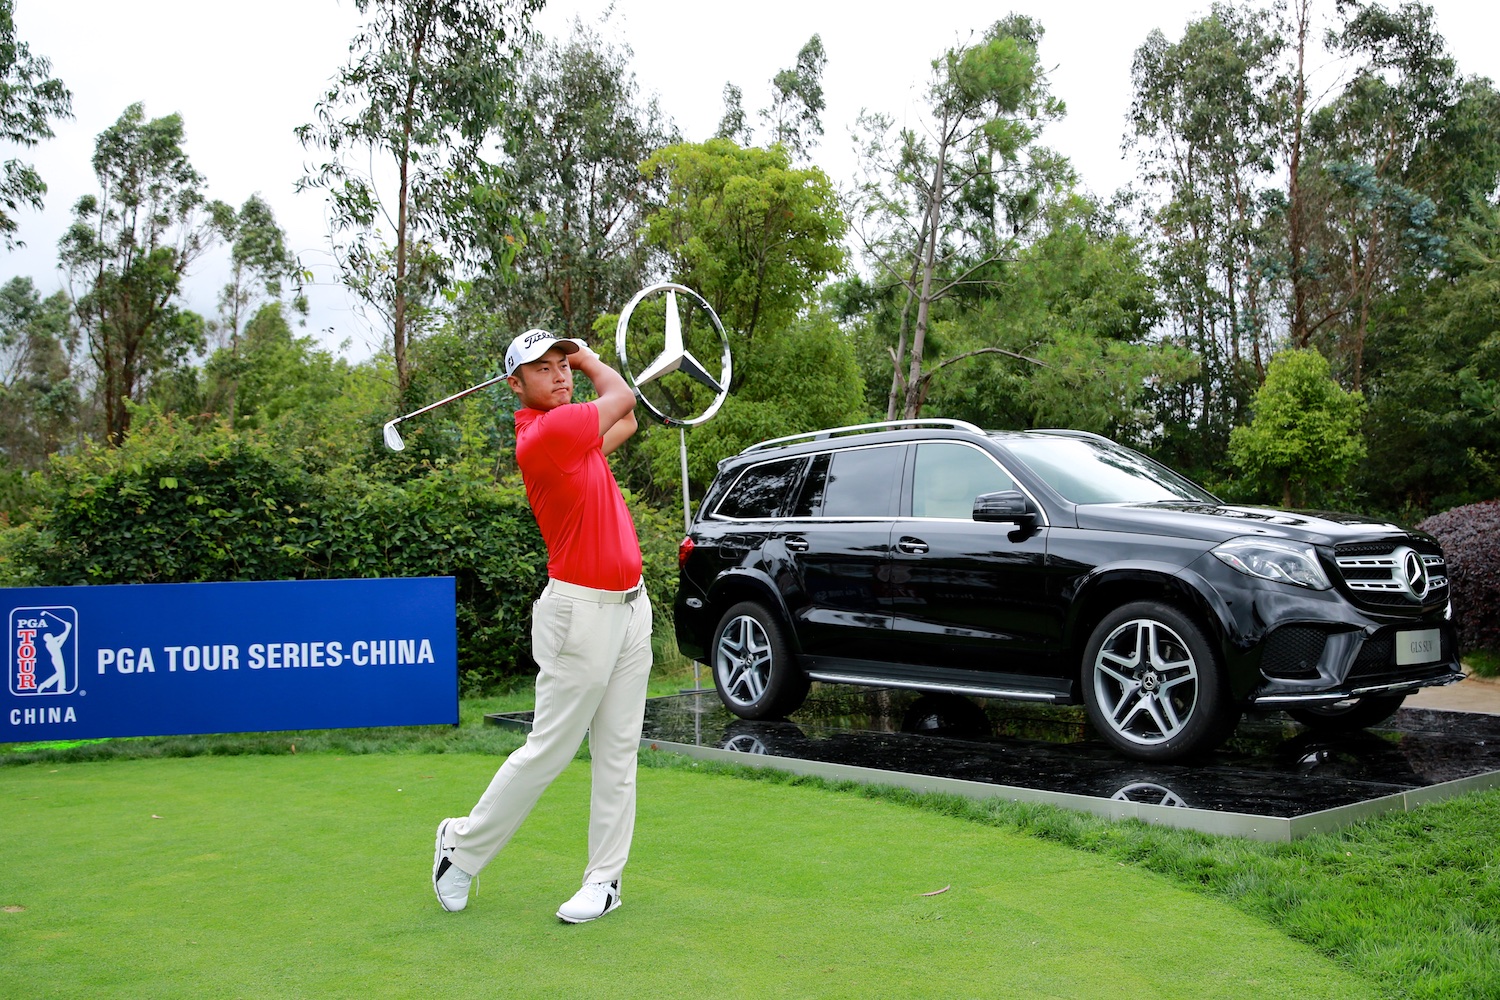 PGA TOUR Series-China Drives into New Era with Mercedes-Benz